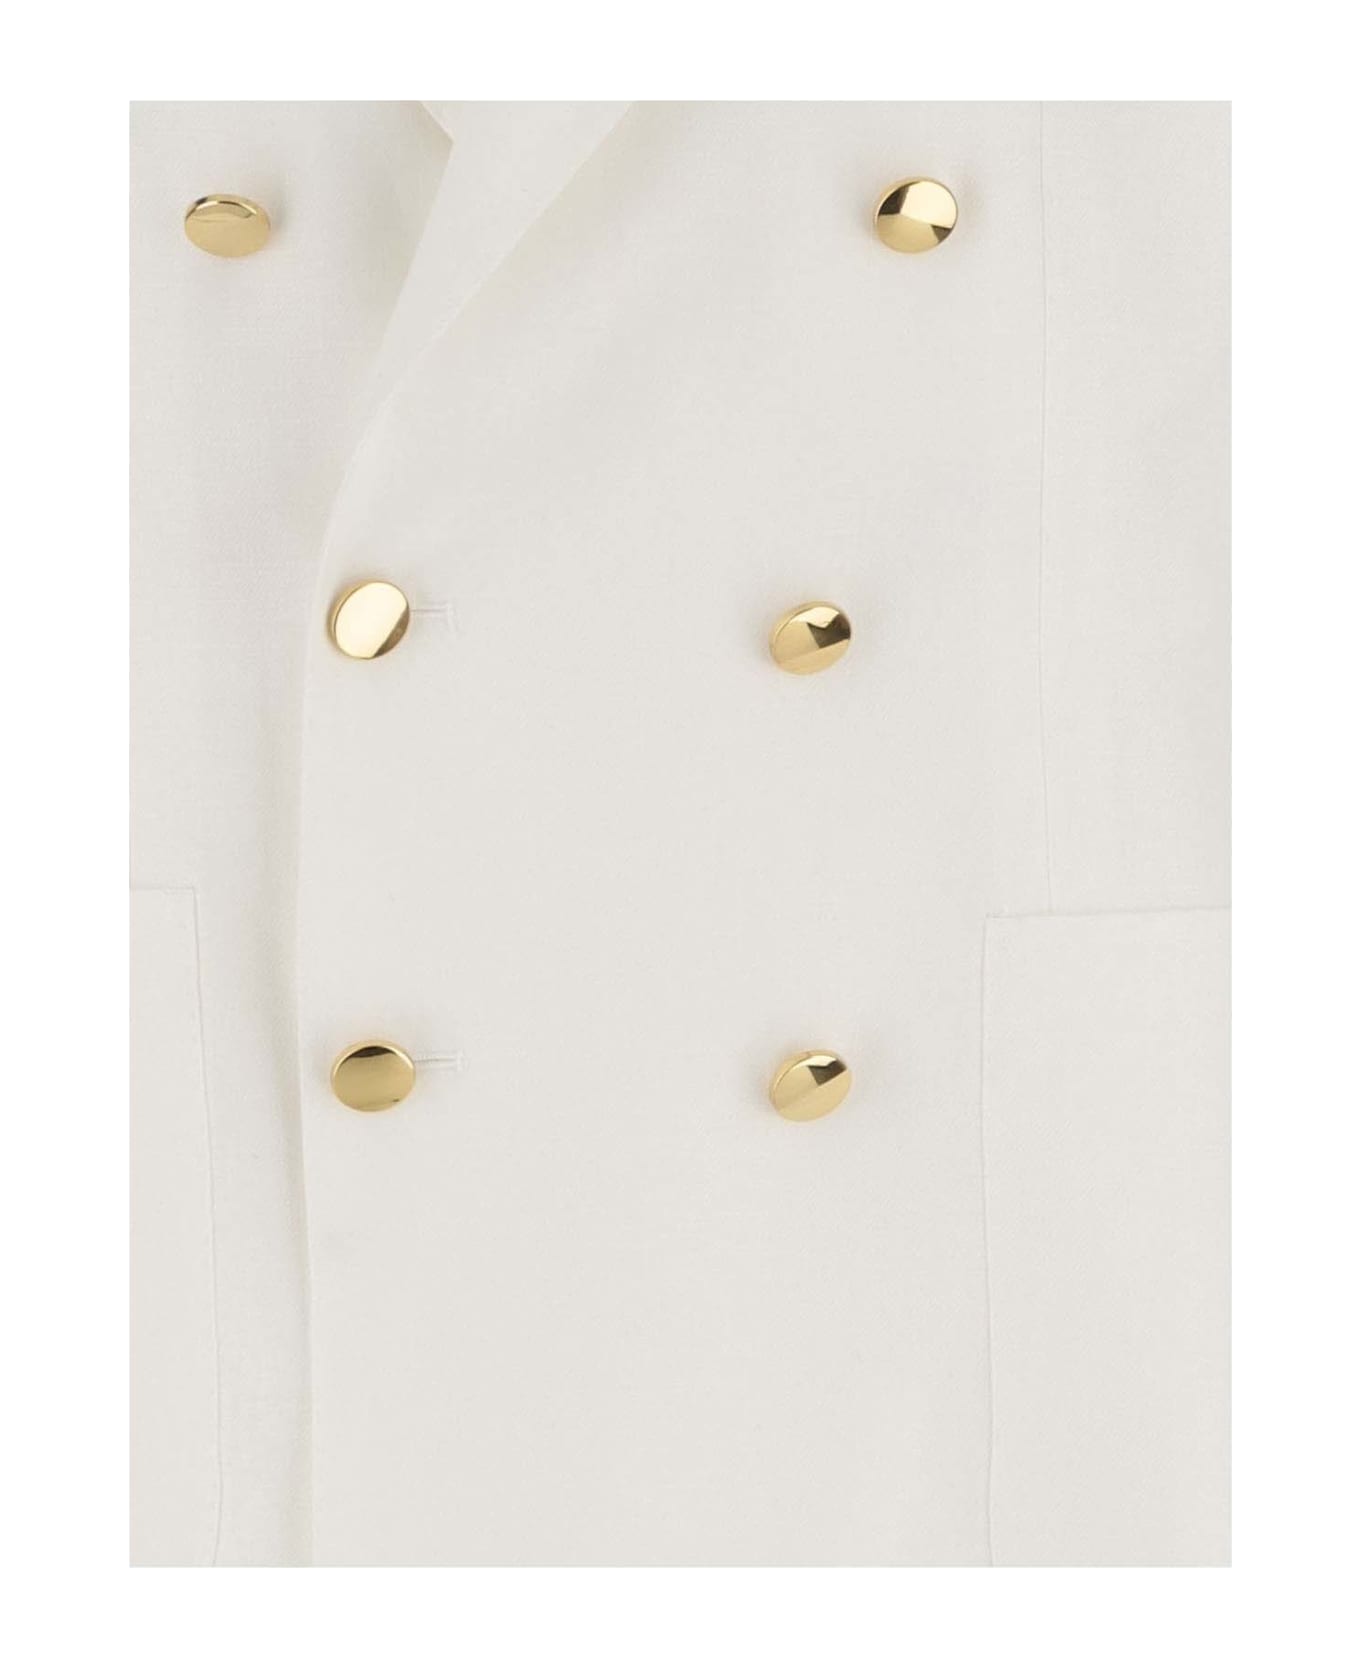 Tagliatore Double-breasted Linen Jacket - White ブレザー